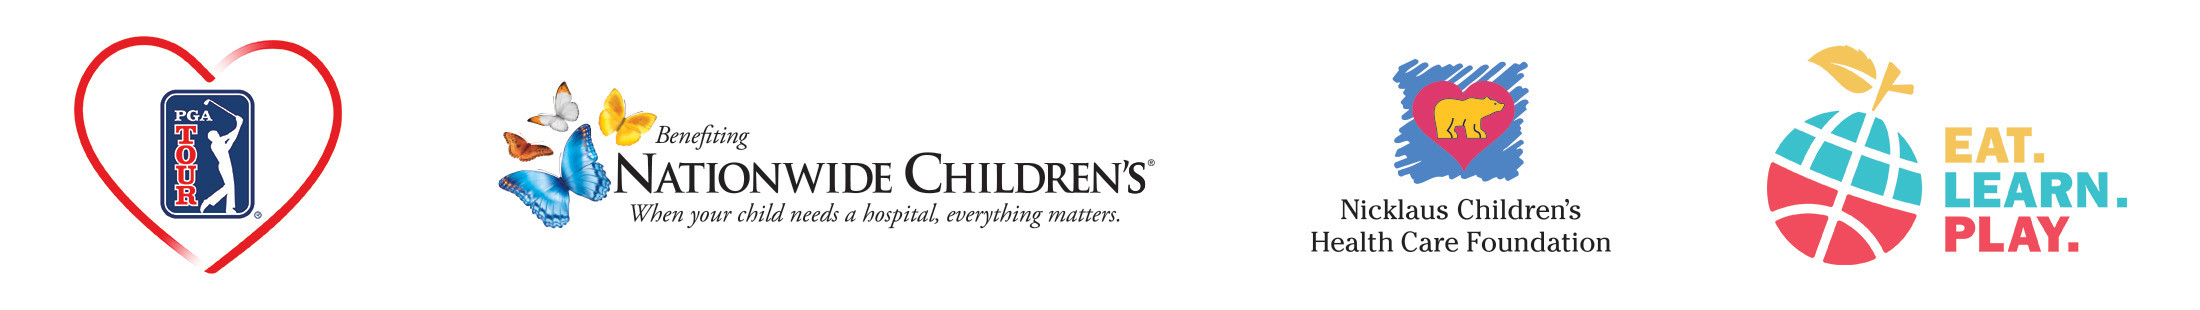 Nationwide Children's Logos 